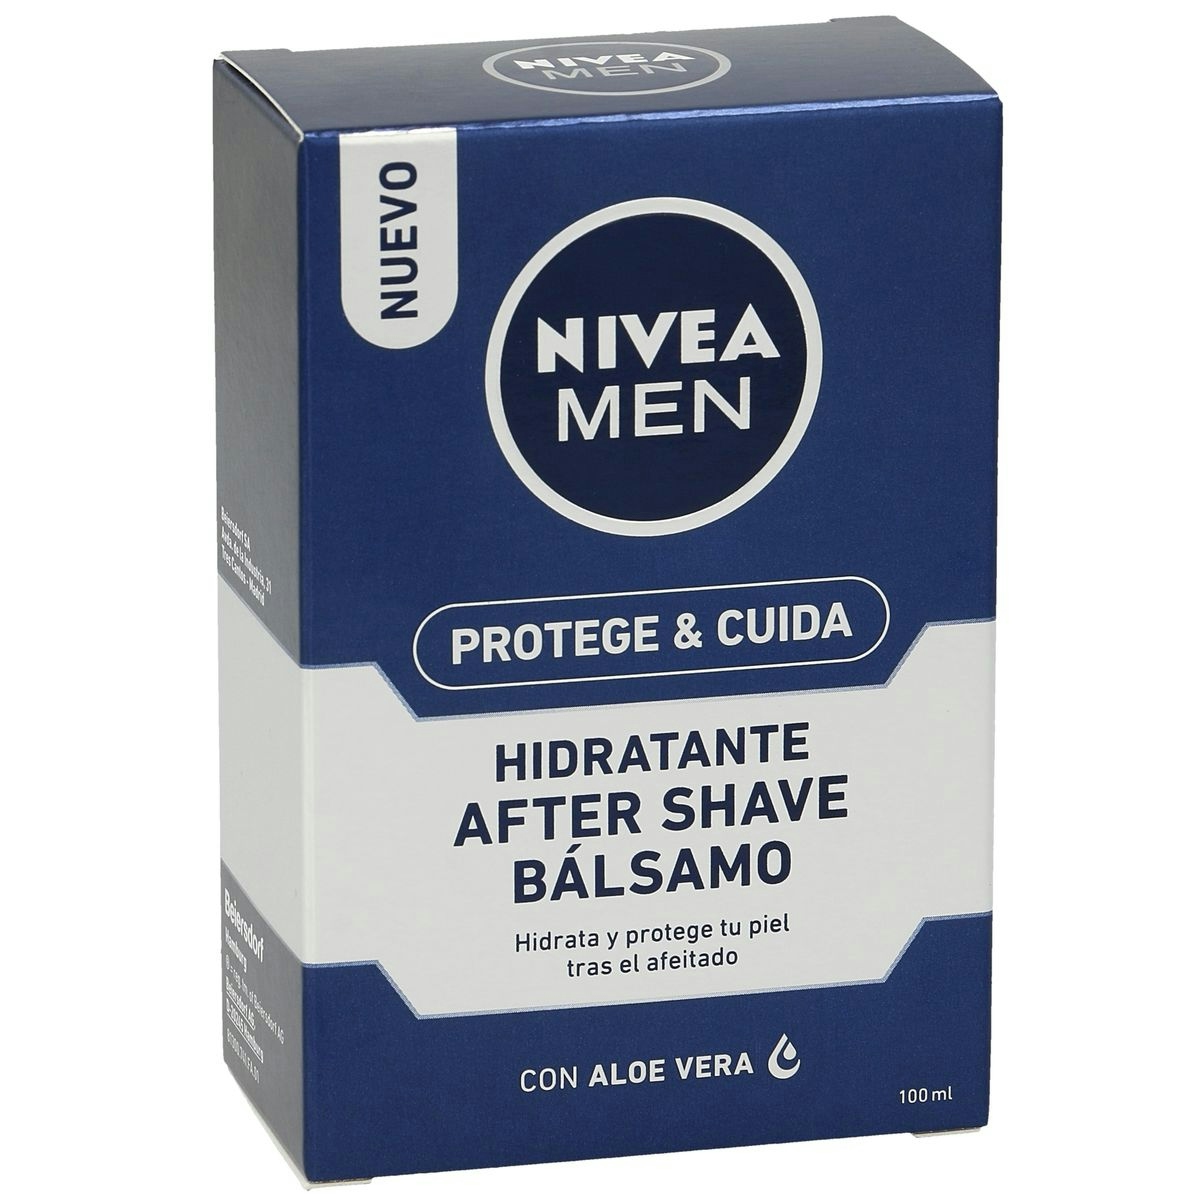 Bálsamo after shave NIVEA hidratante protege & cuida frasco 100 ml